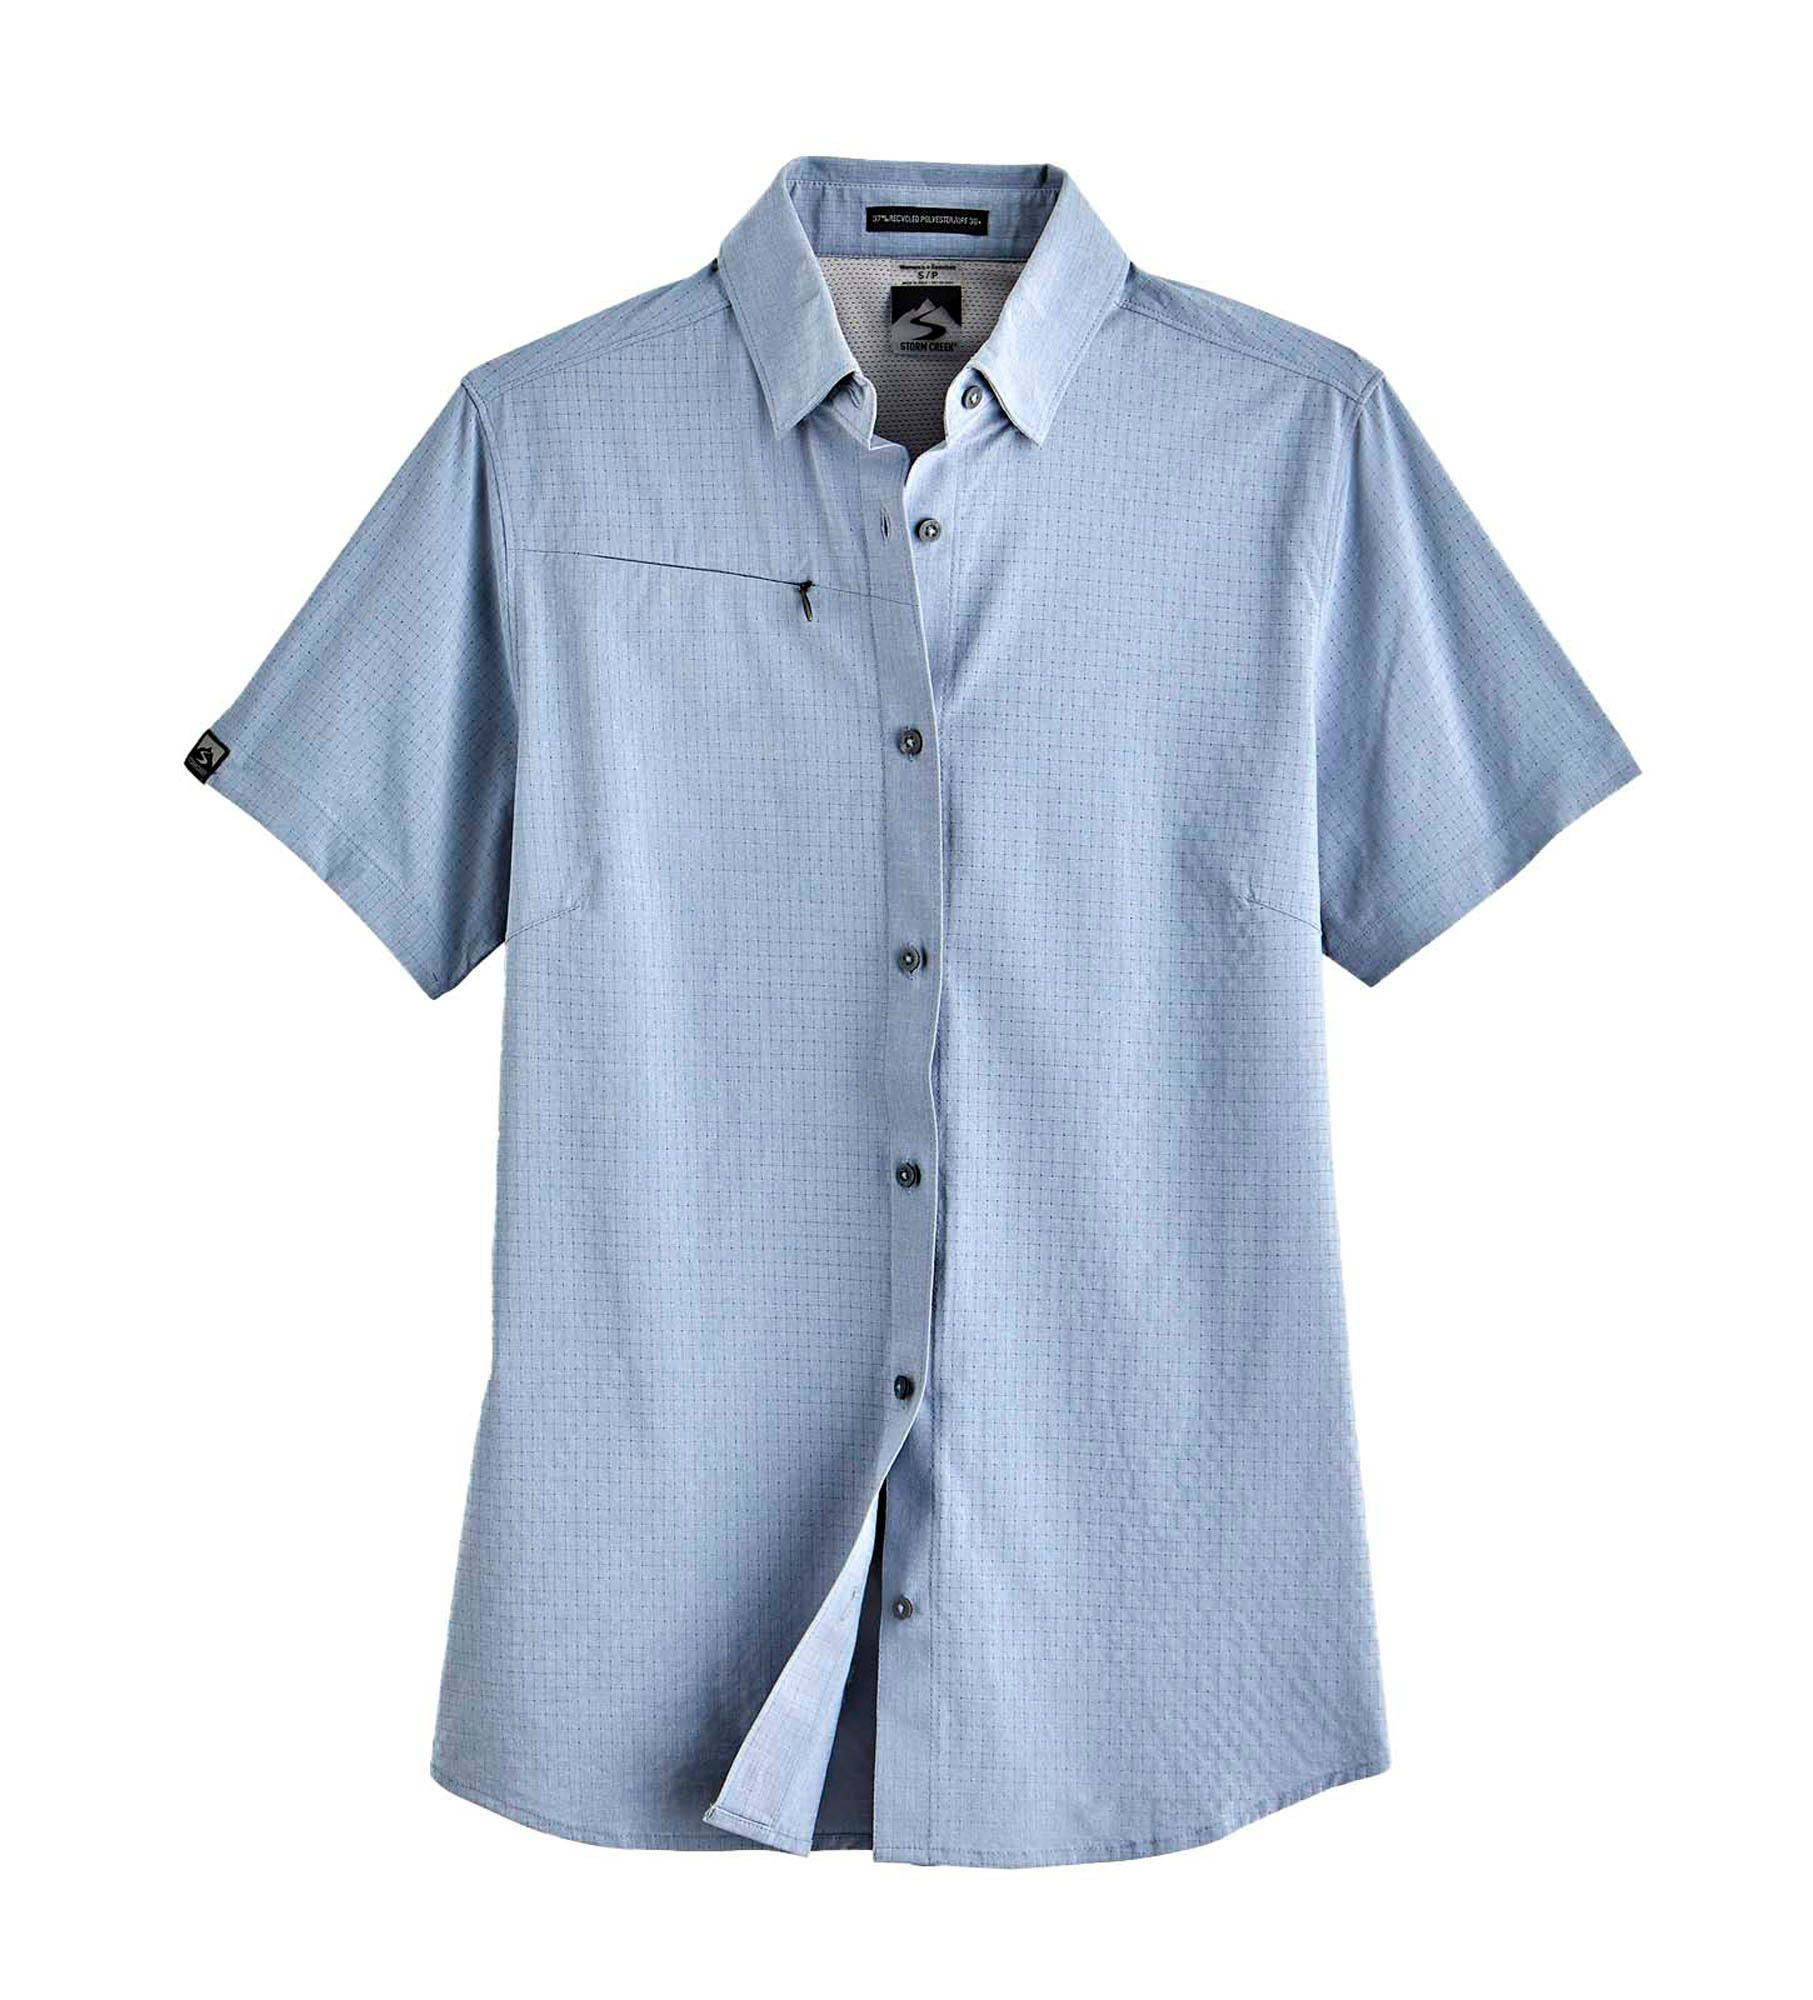 Storm Creek Naturalist Short-Sleeve Shirt for Ladies - Blue Mist - XL